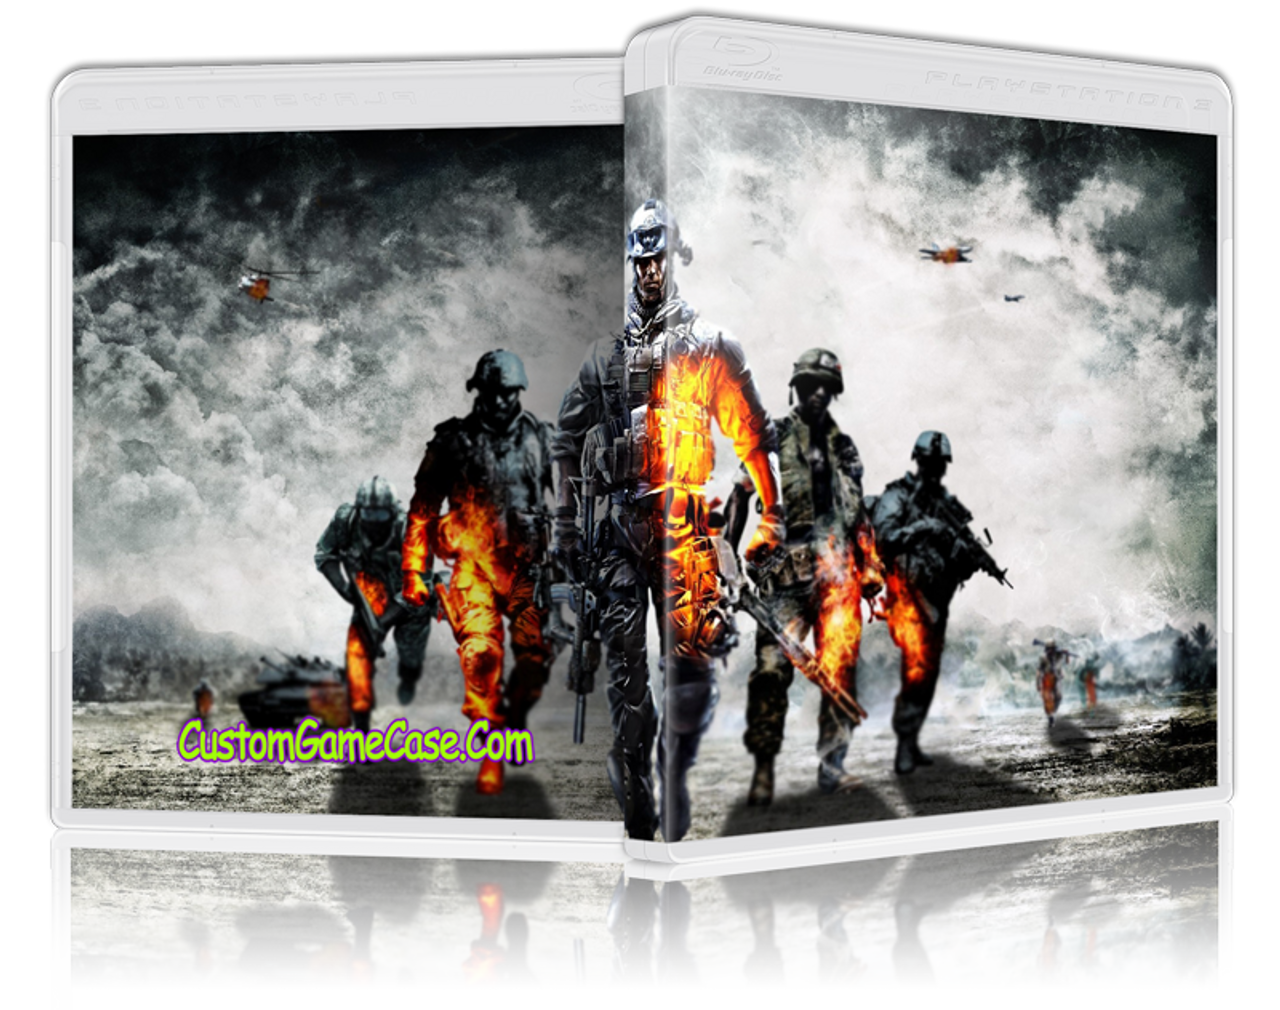 Battlefield 4 (Sony PlayStation 3/PS3)